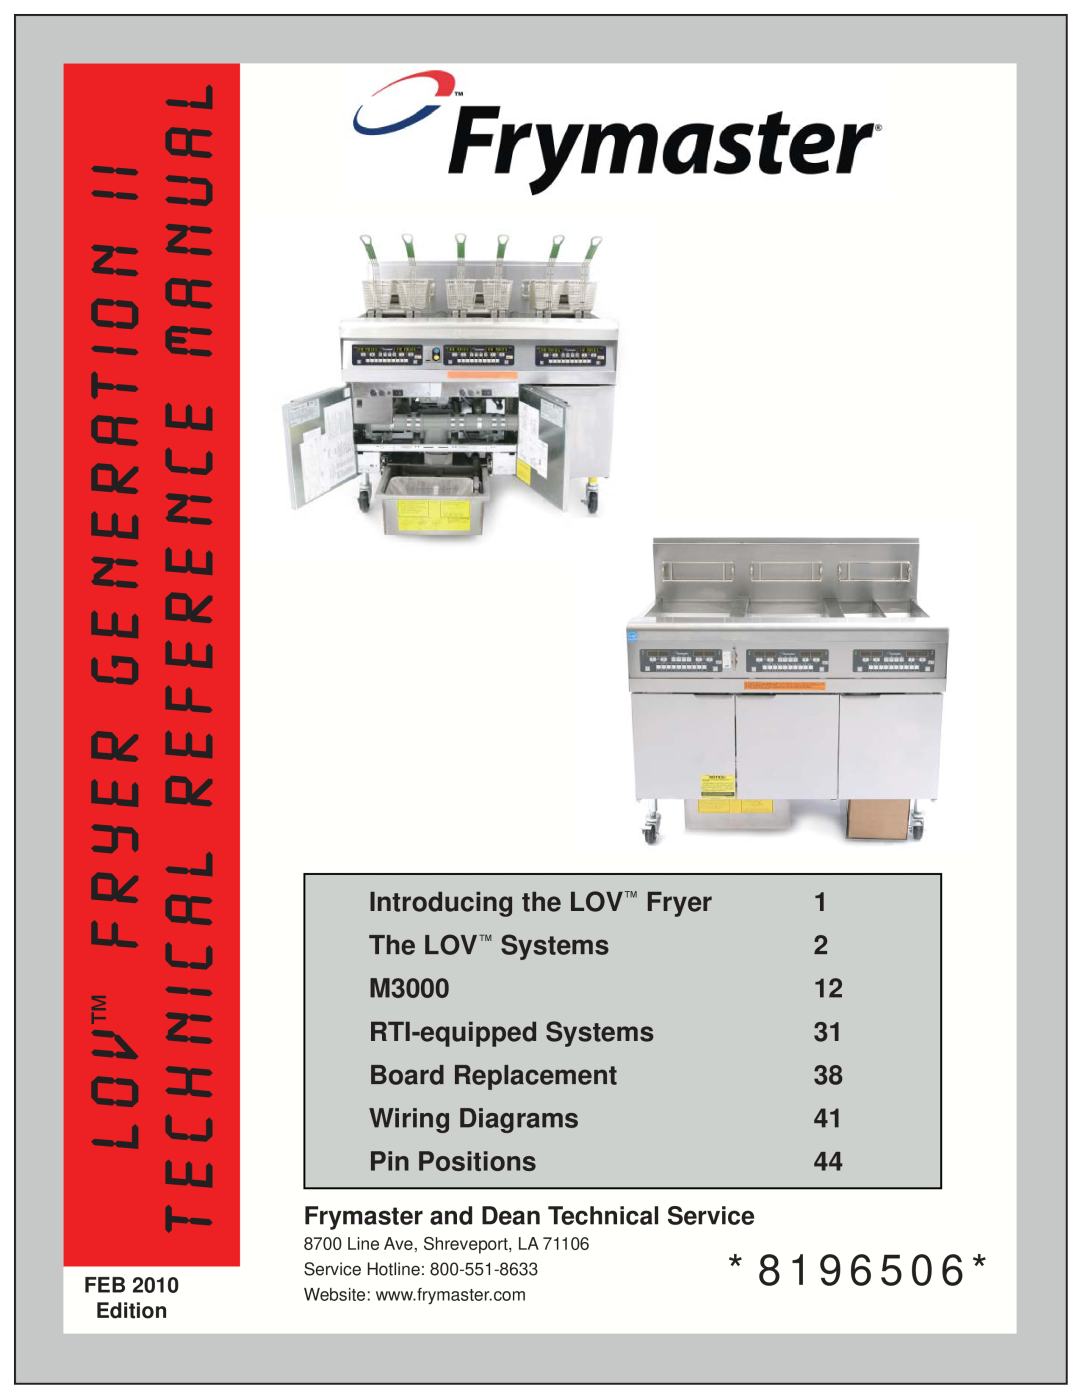 Frymaster M3000 manual Frymaster and Dean Technical Service, FEB Edition, Line Ave, Shreveport, LA, Service Hotline, Fr Y 